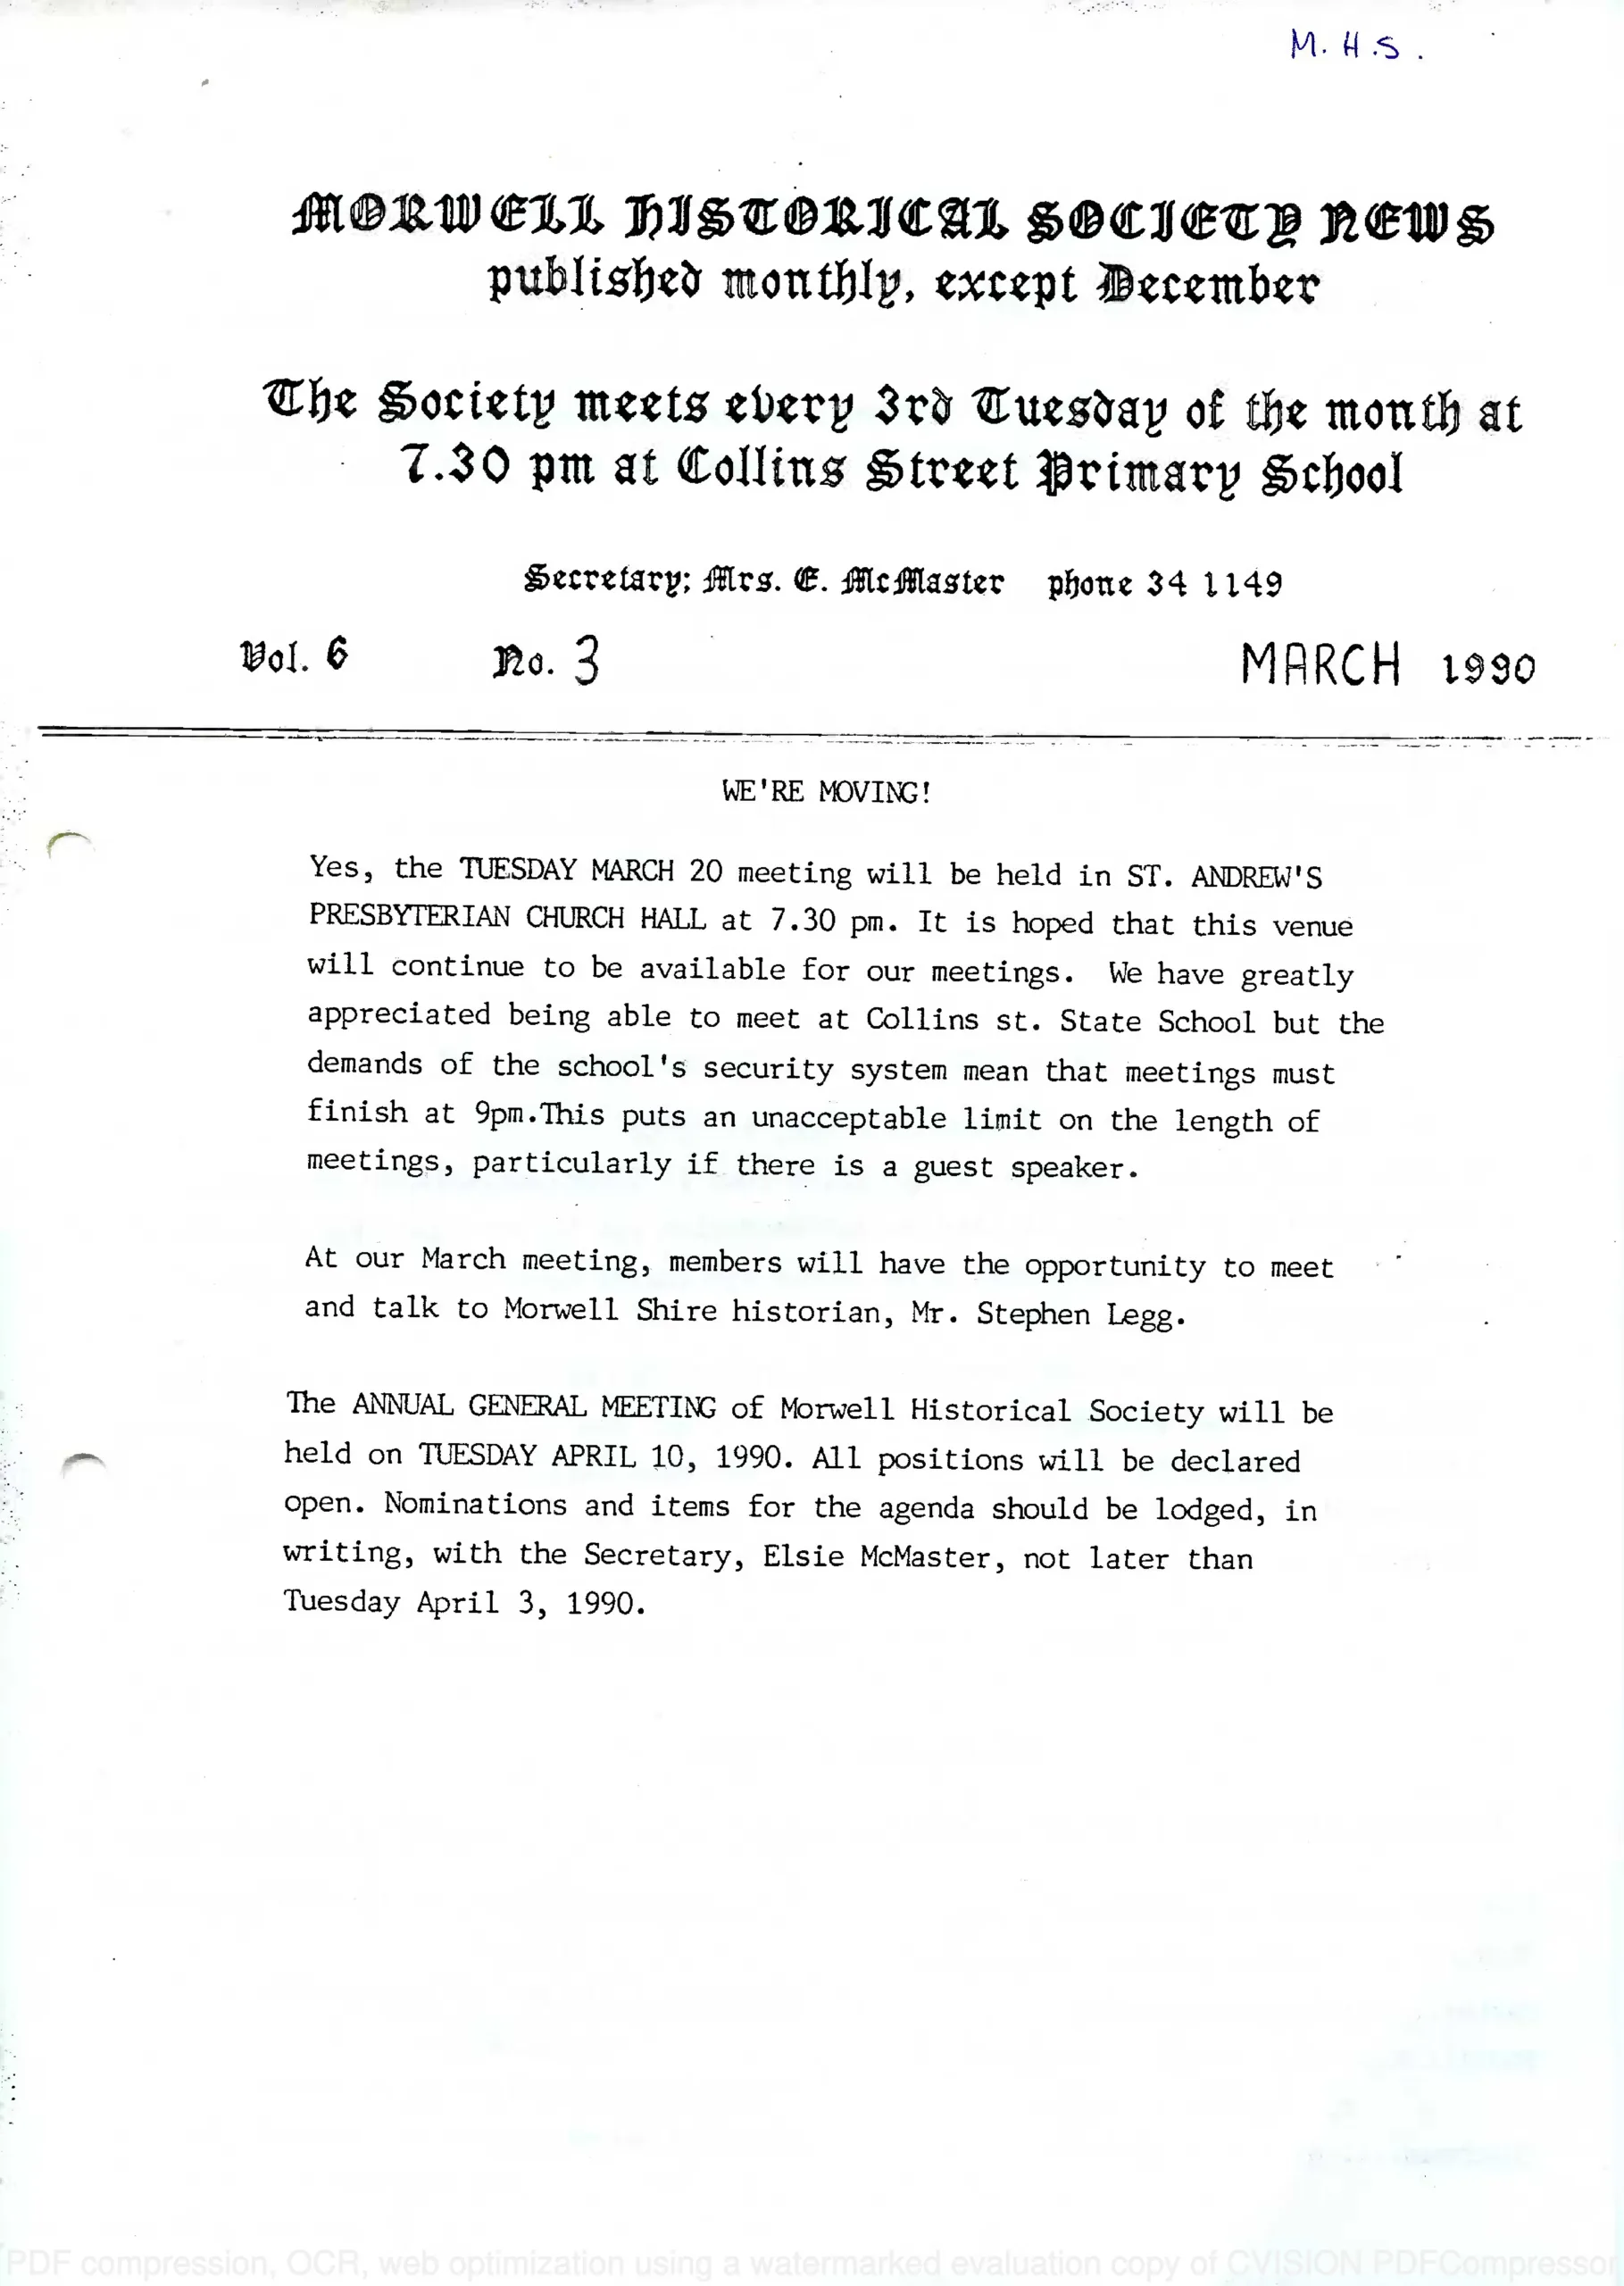 Newsletter March 1990